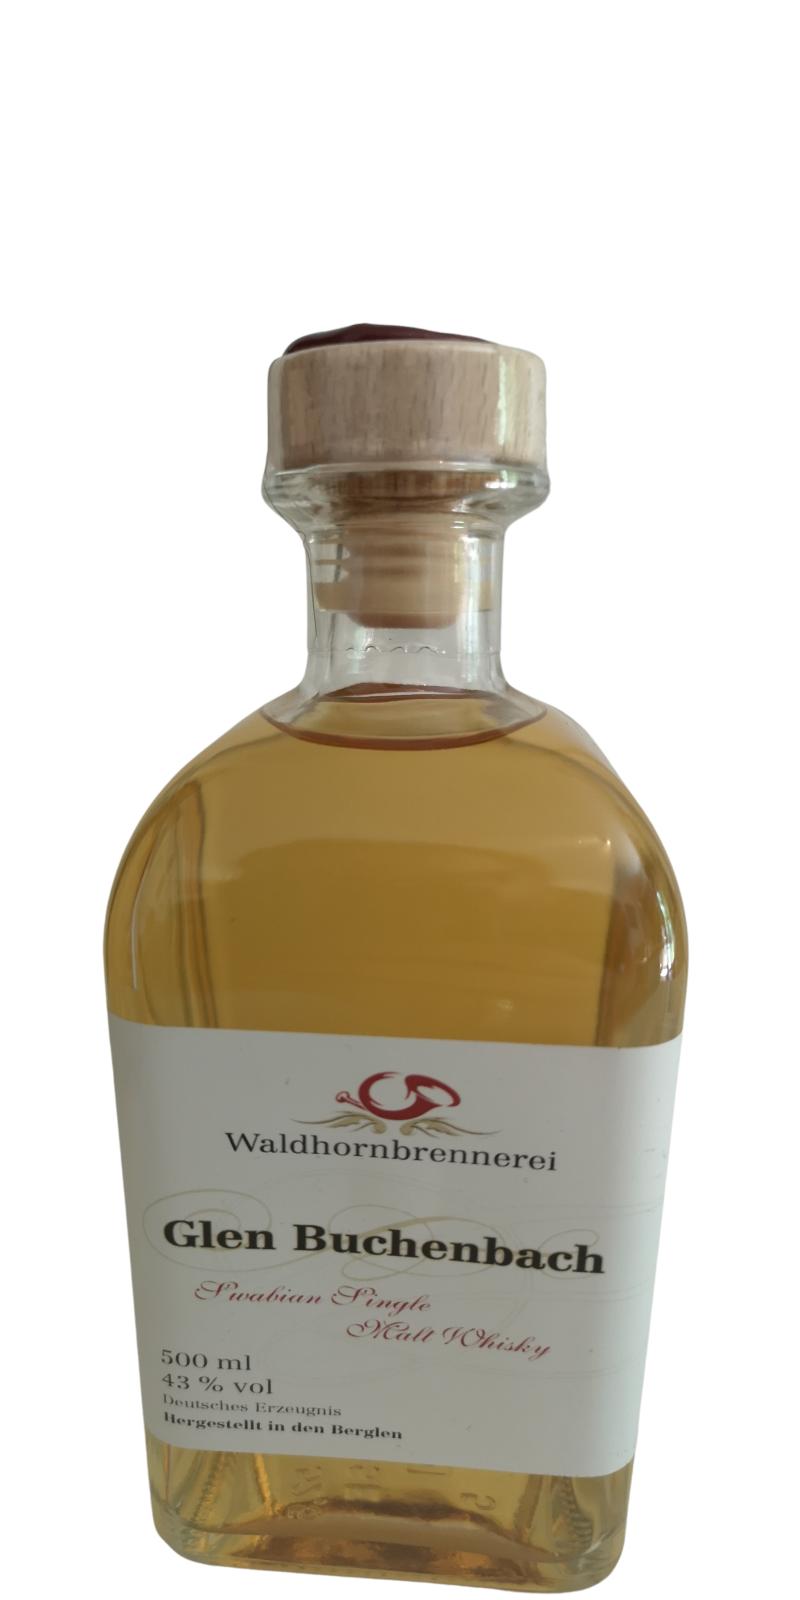 Glen Buchenbach Swabian Single Malt Whisky 43% 500ml